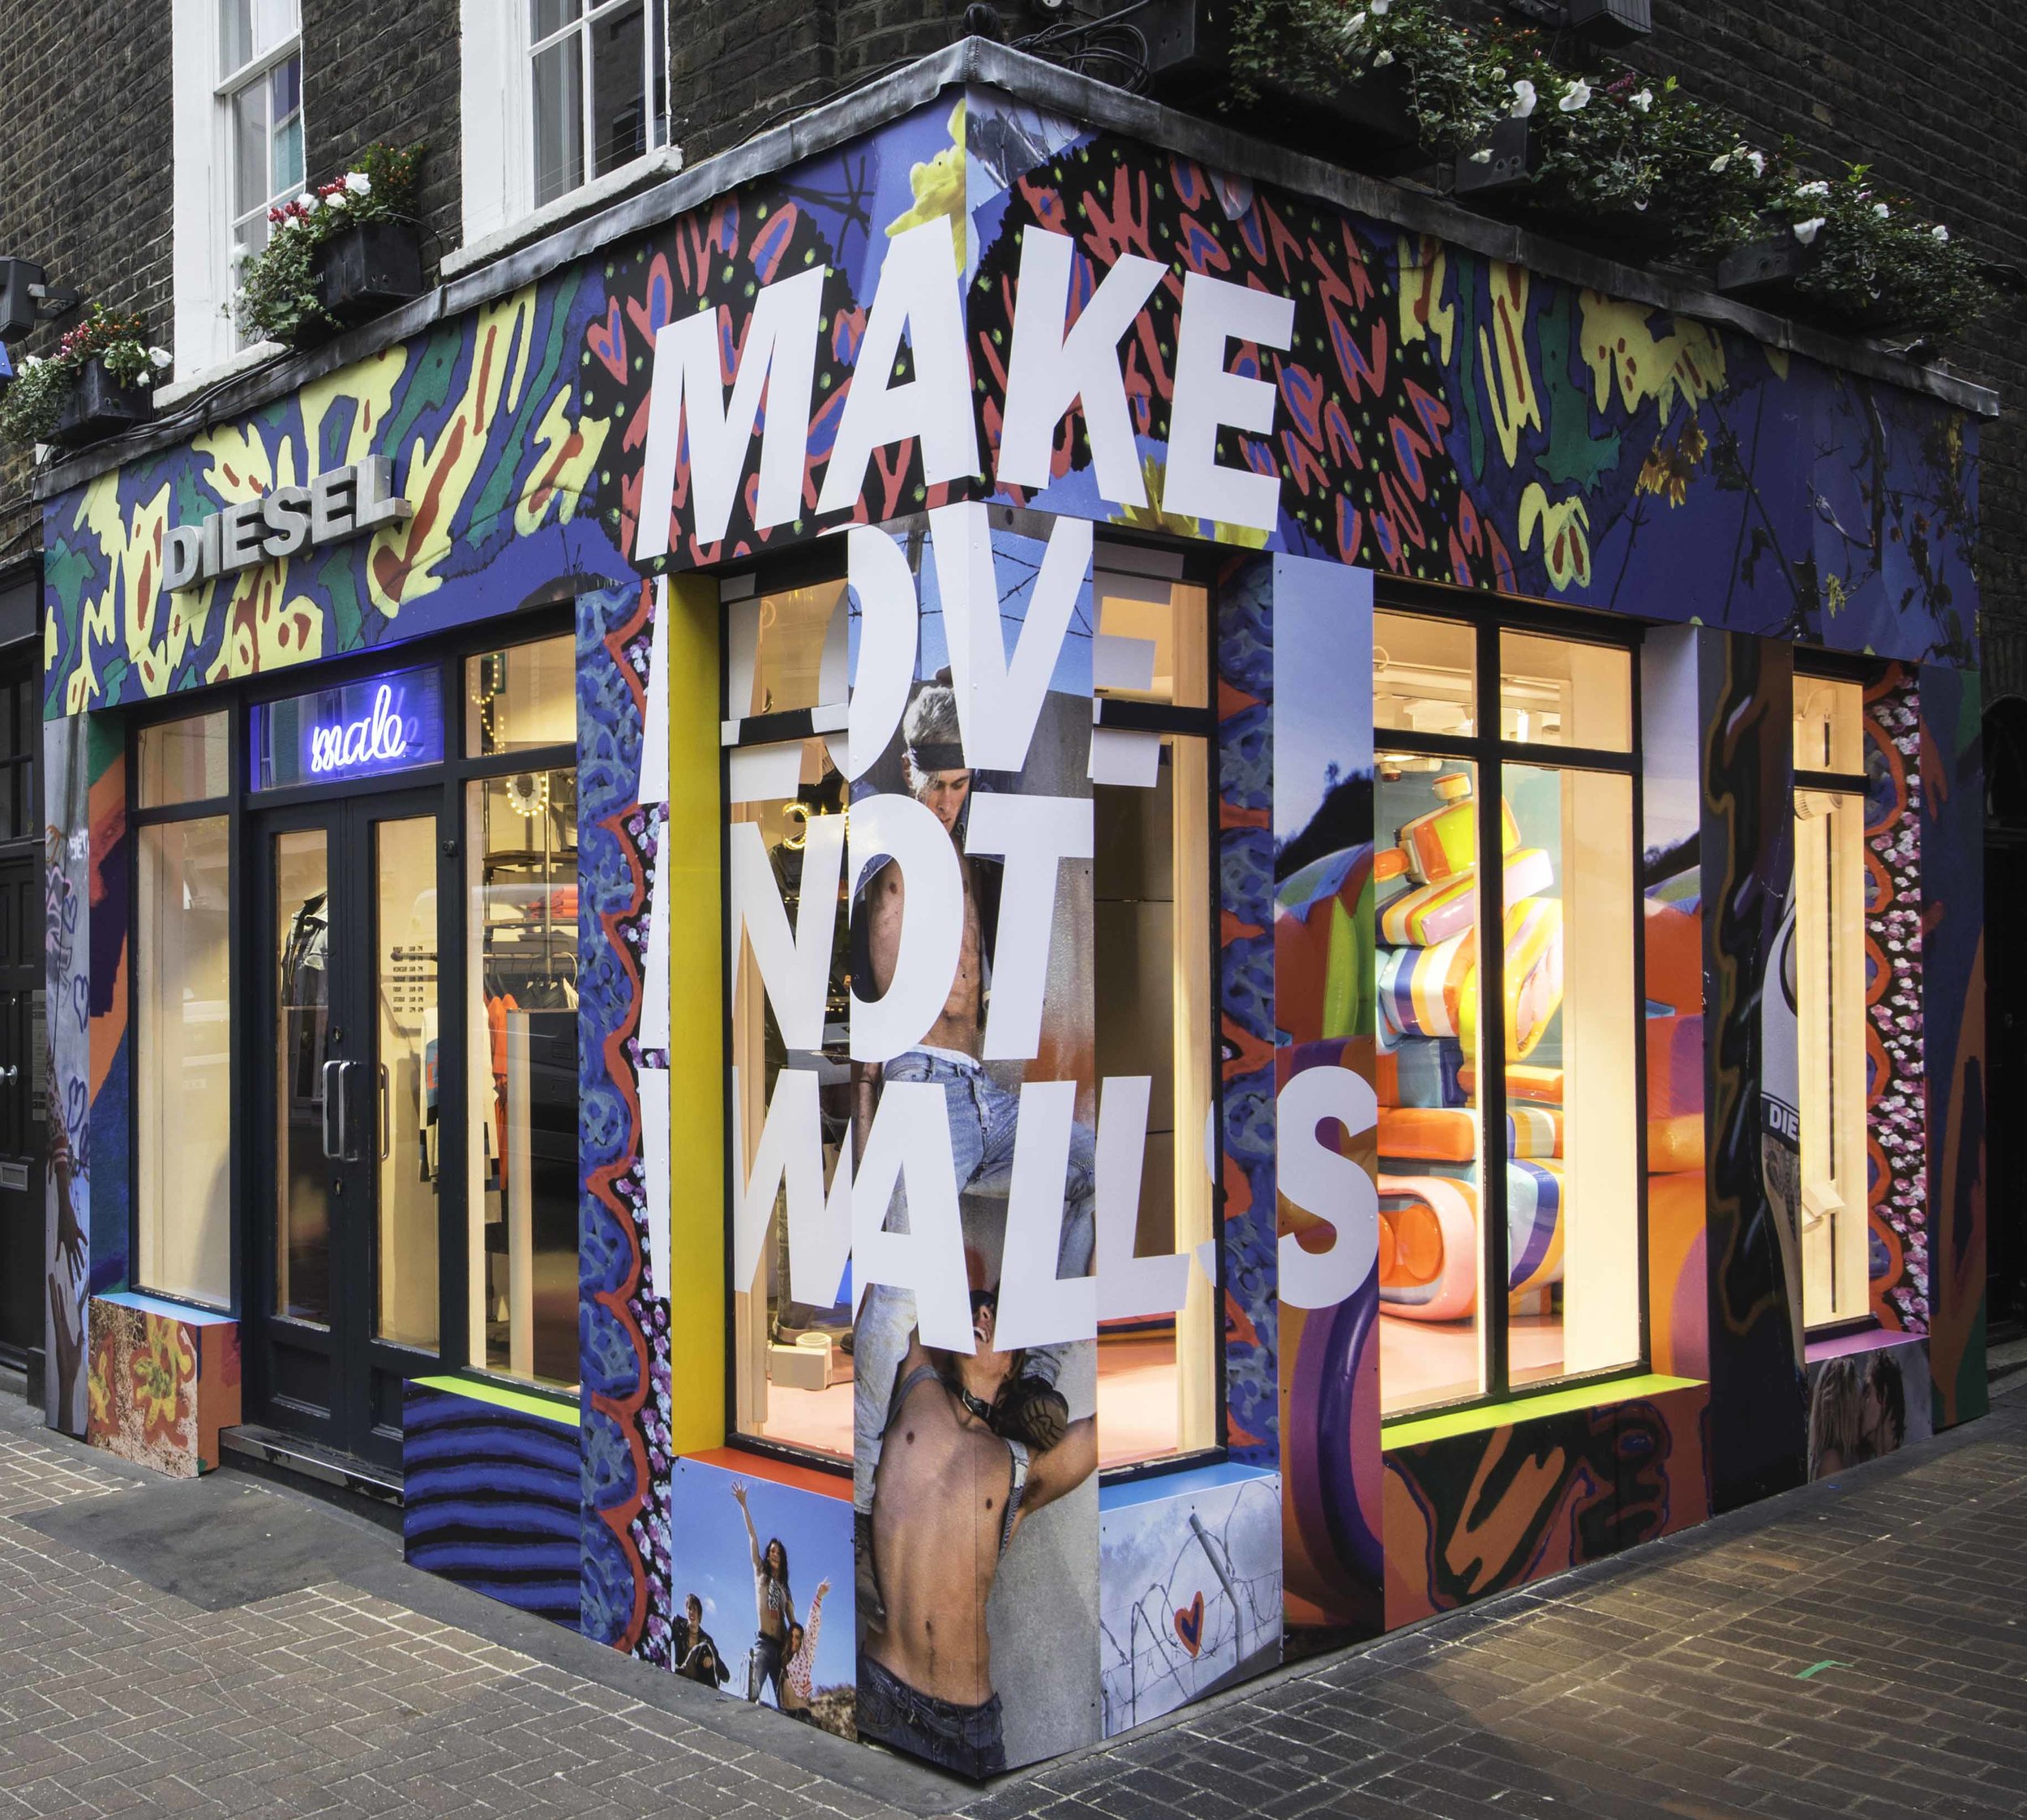 Diesel-Carnaby-Street-MAKE-LOVE-NOT-WALLS-Campaign-Male-Store-2017.jpg